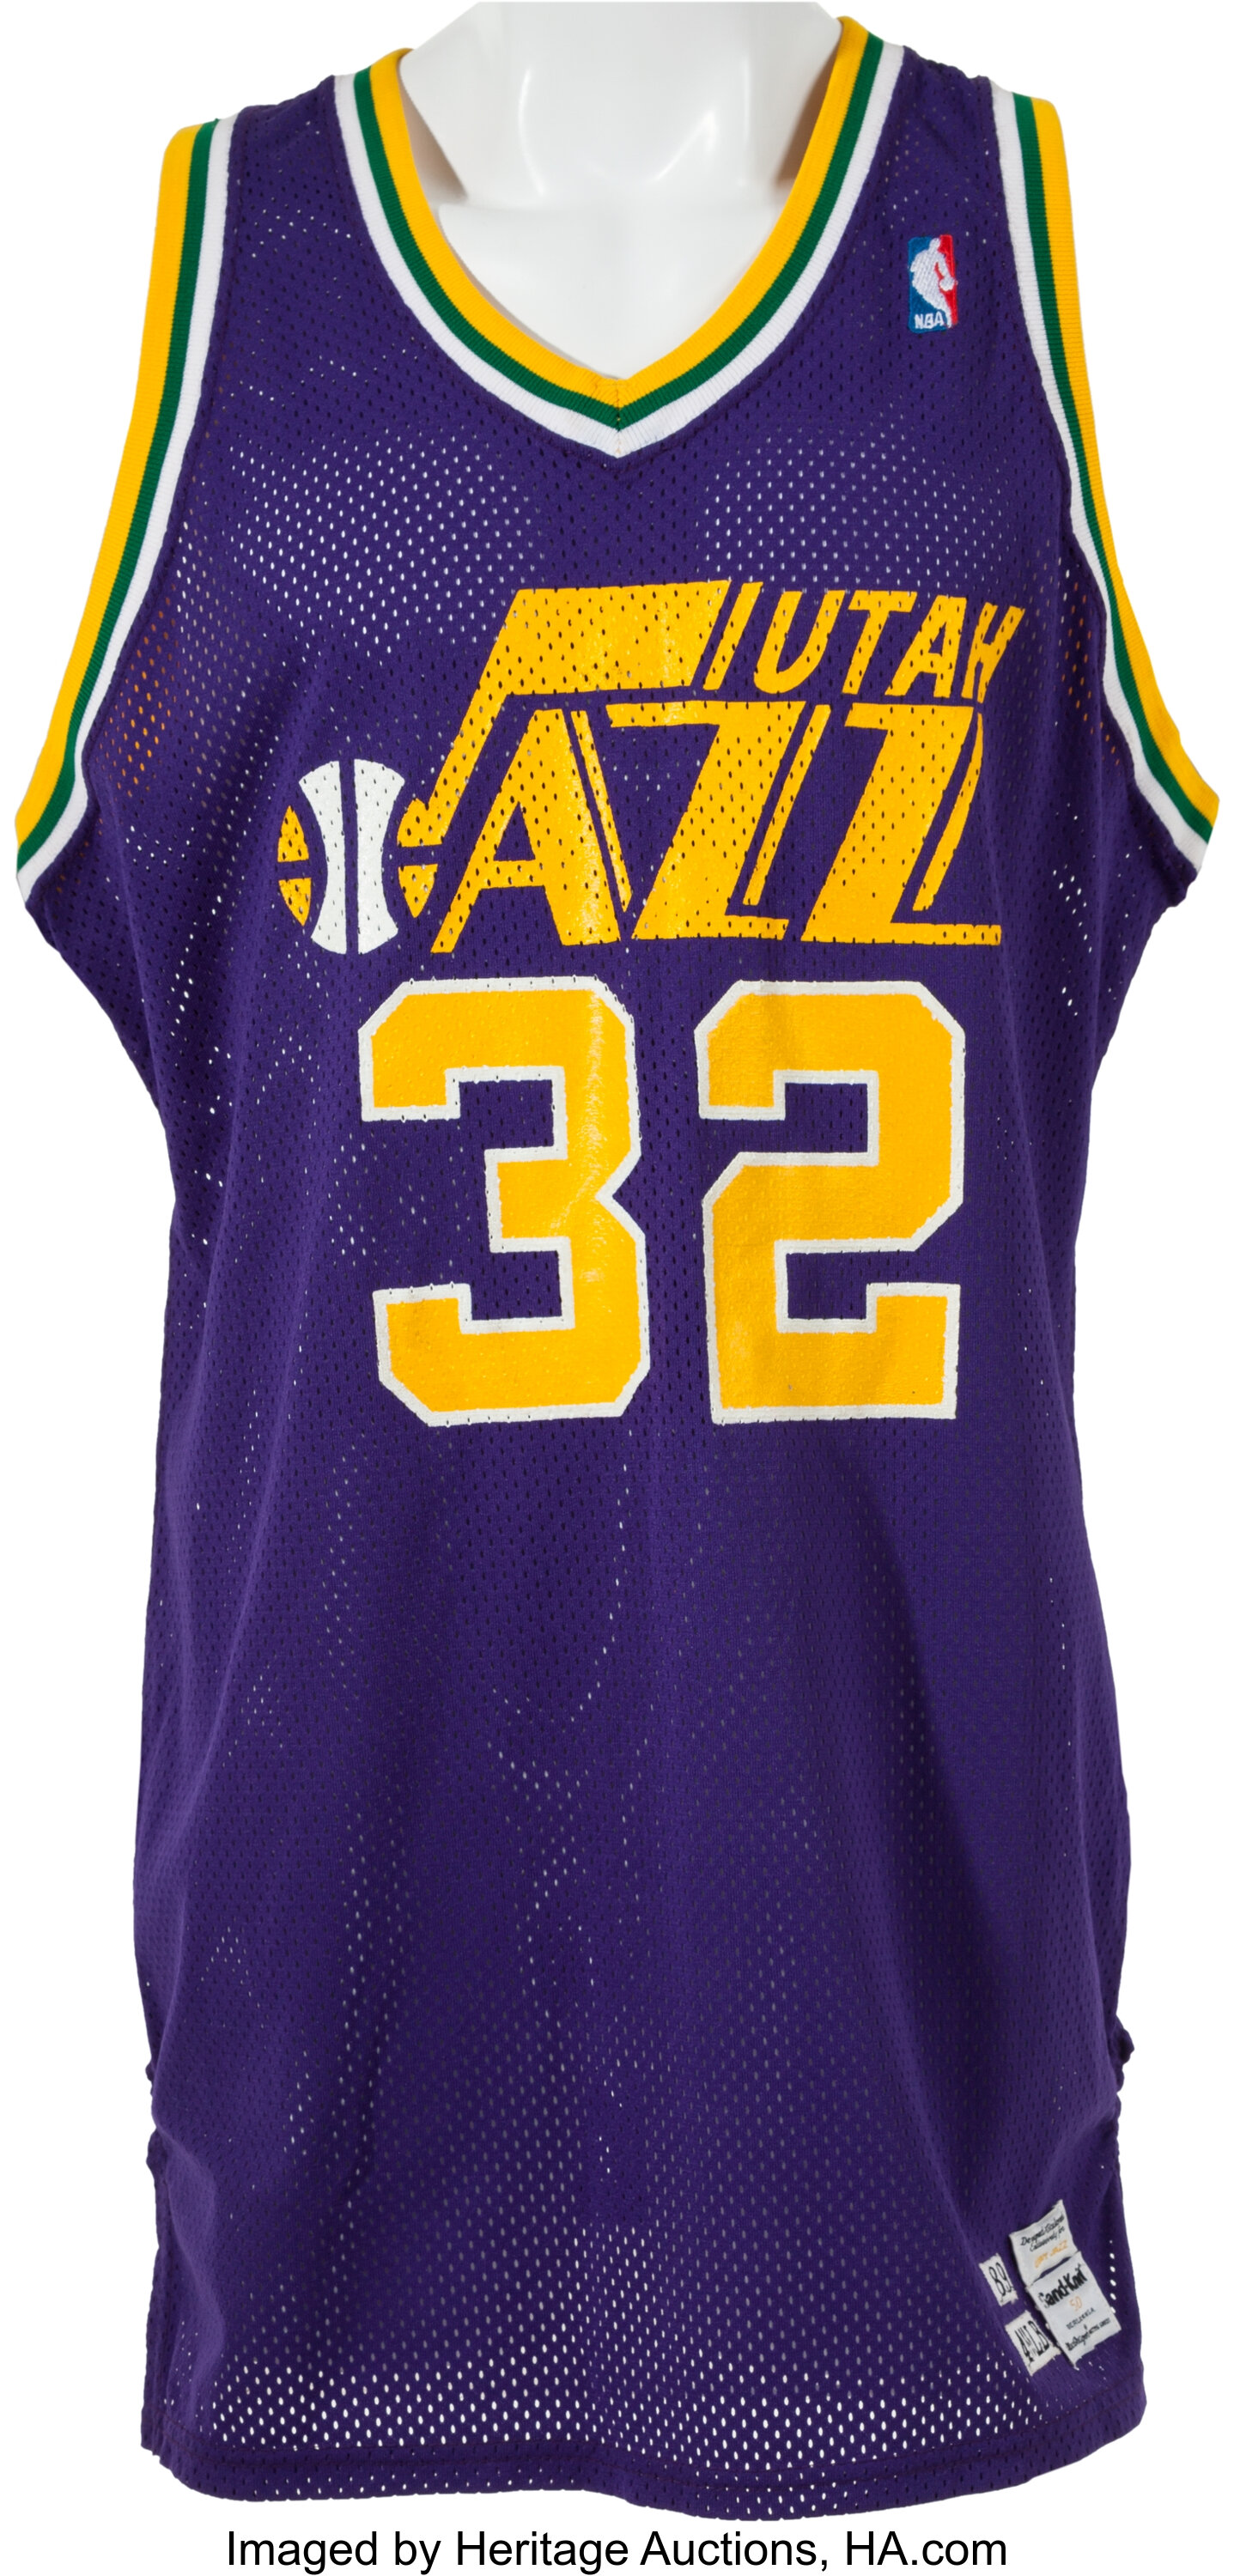 Utah Jazz Jerseys, Jazz Jersey, Utah Jazz Uniforms